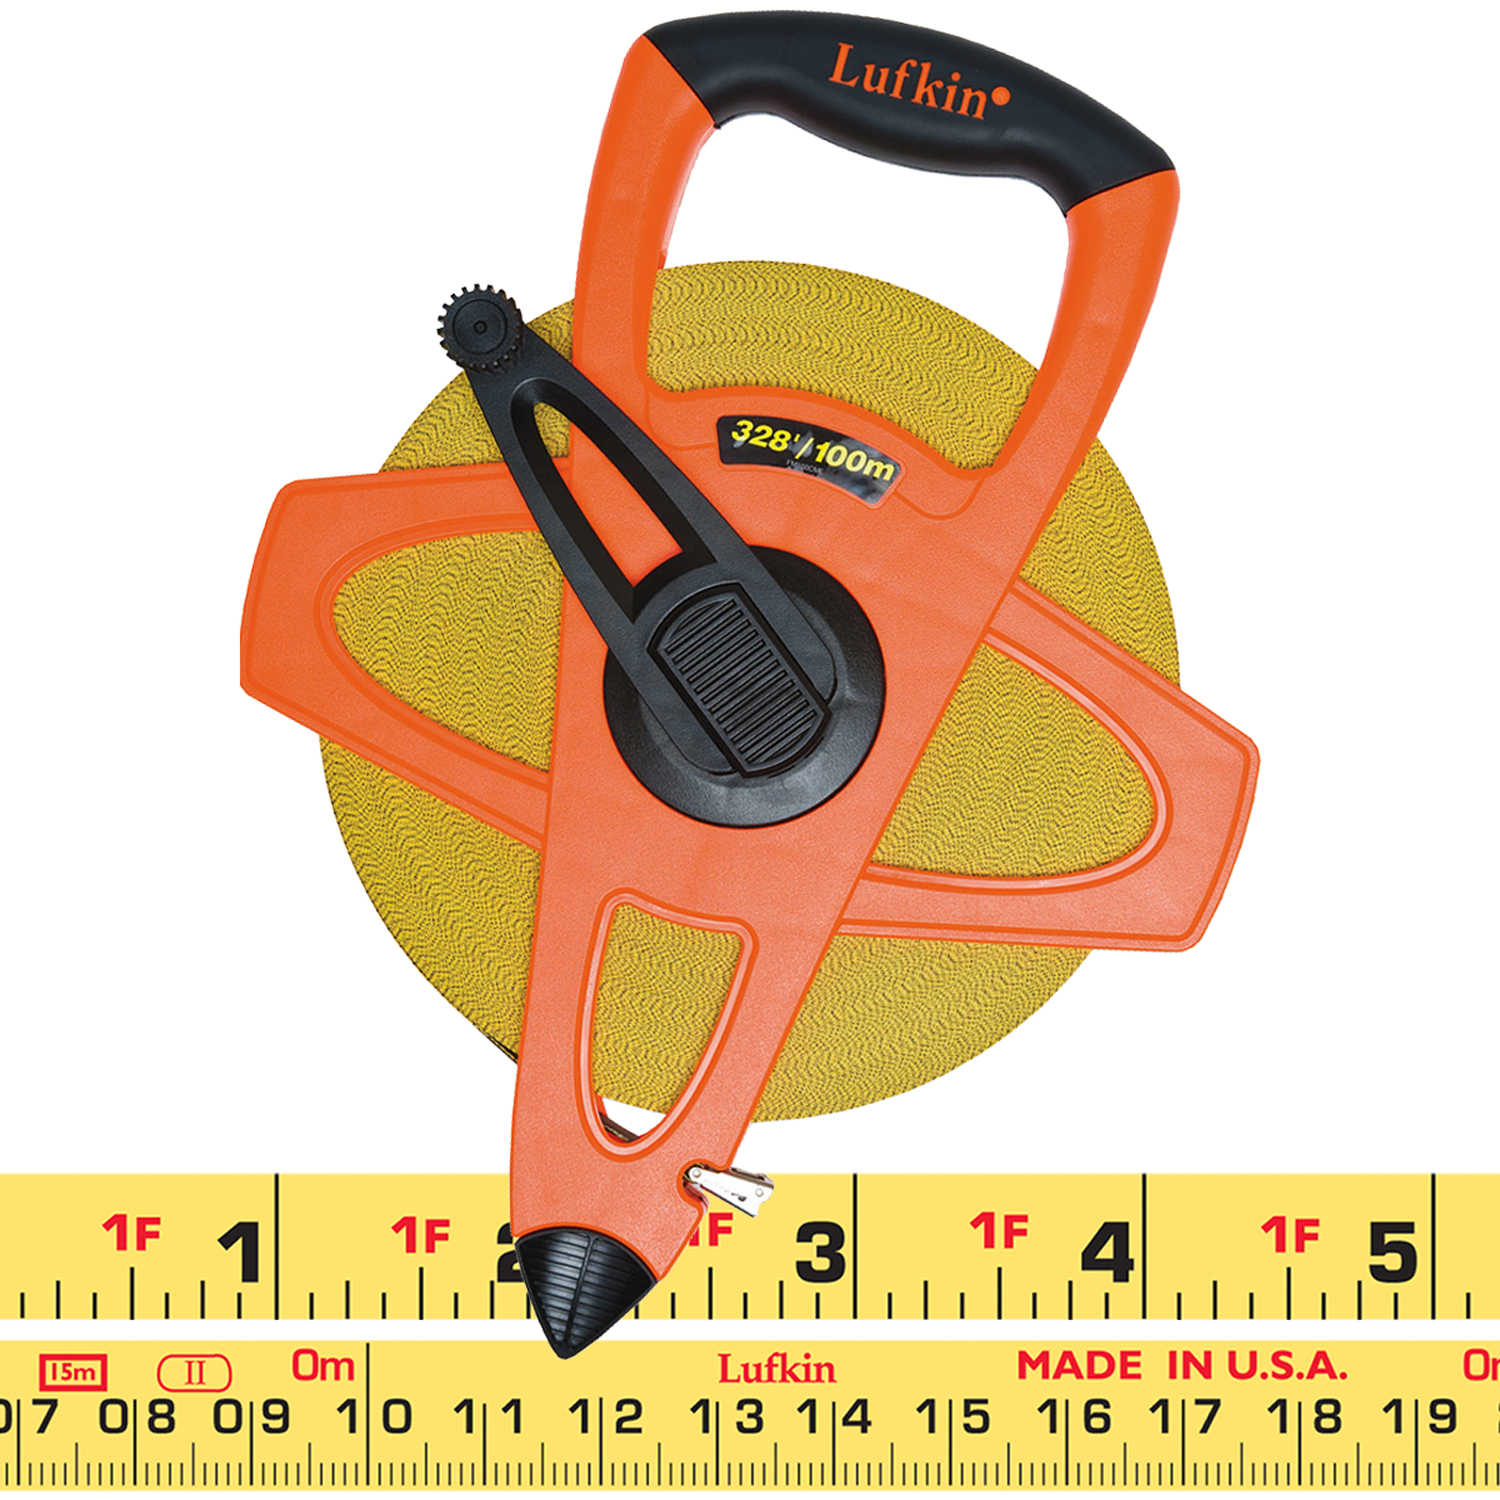 100m Lufkin 328’L Hi-Vis Orange Linear Tape Measure m cm in and 8ths